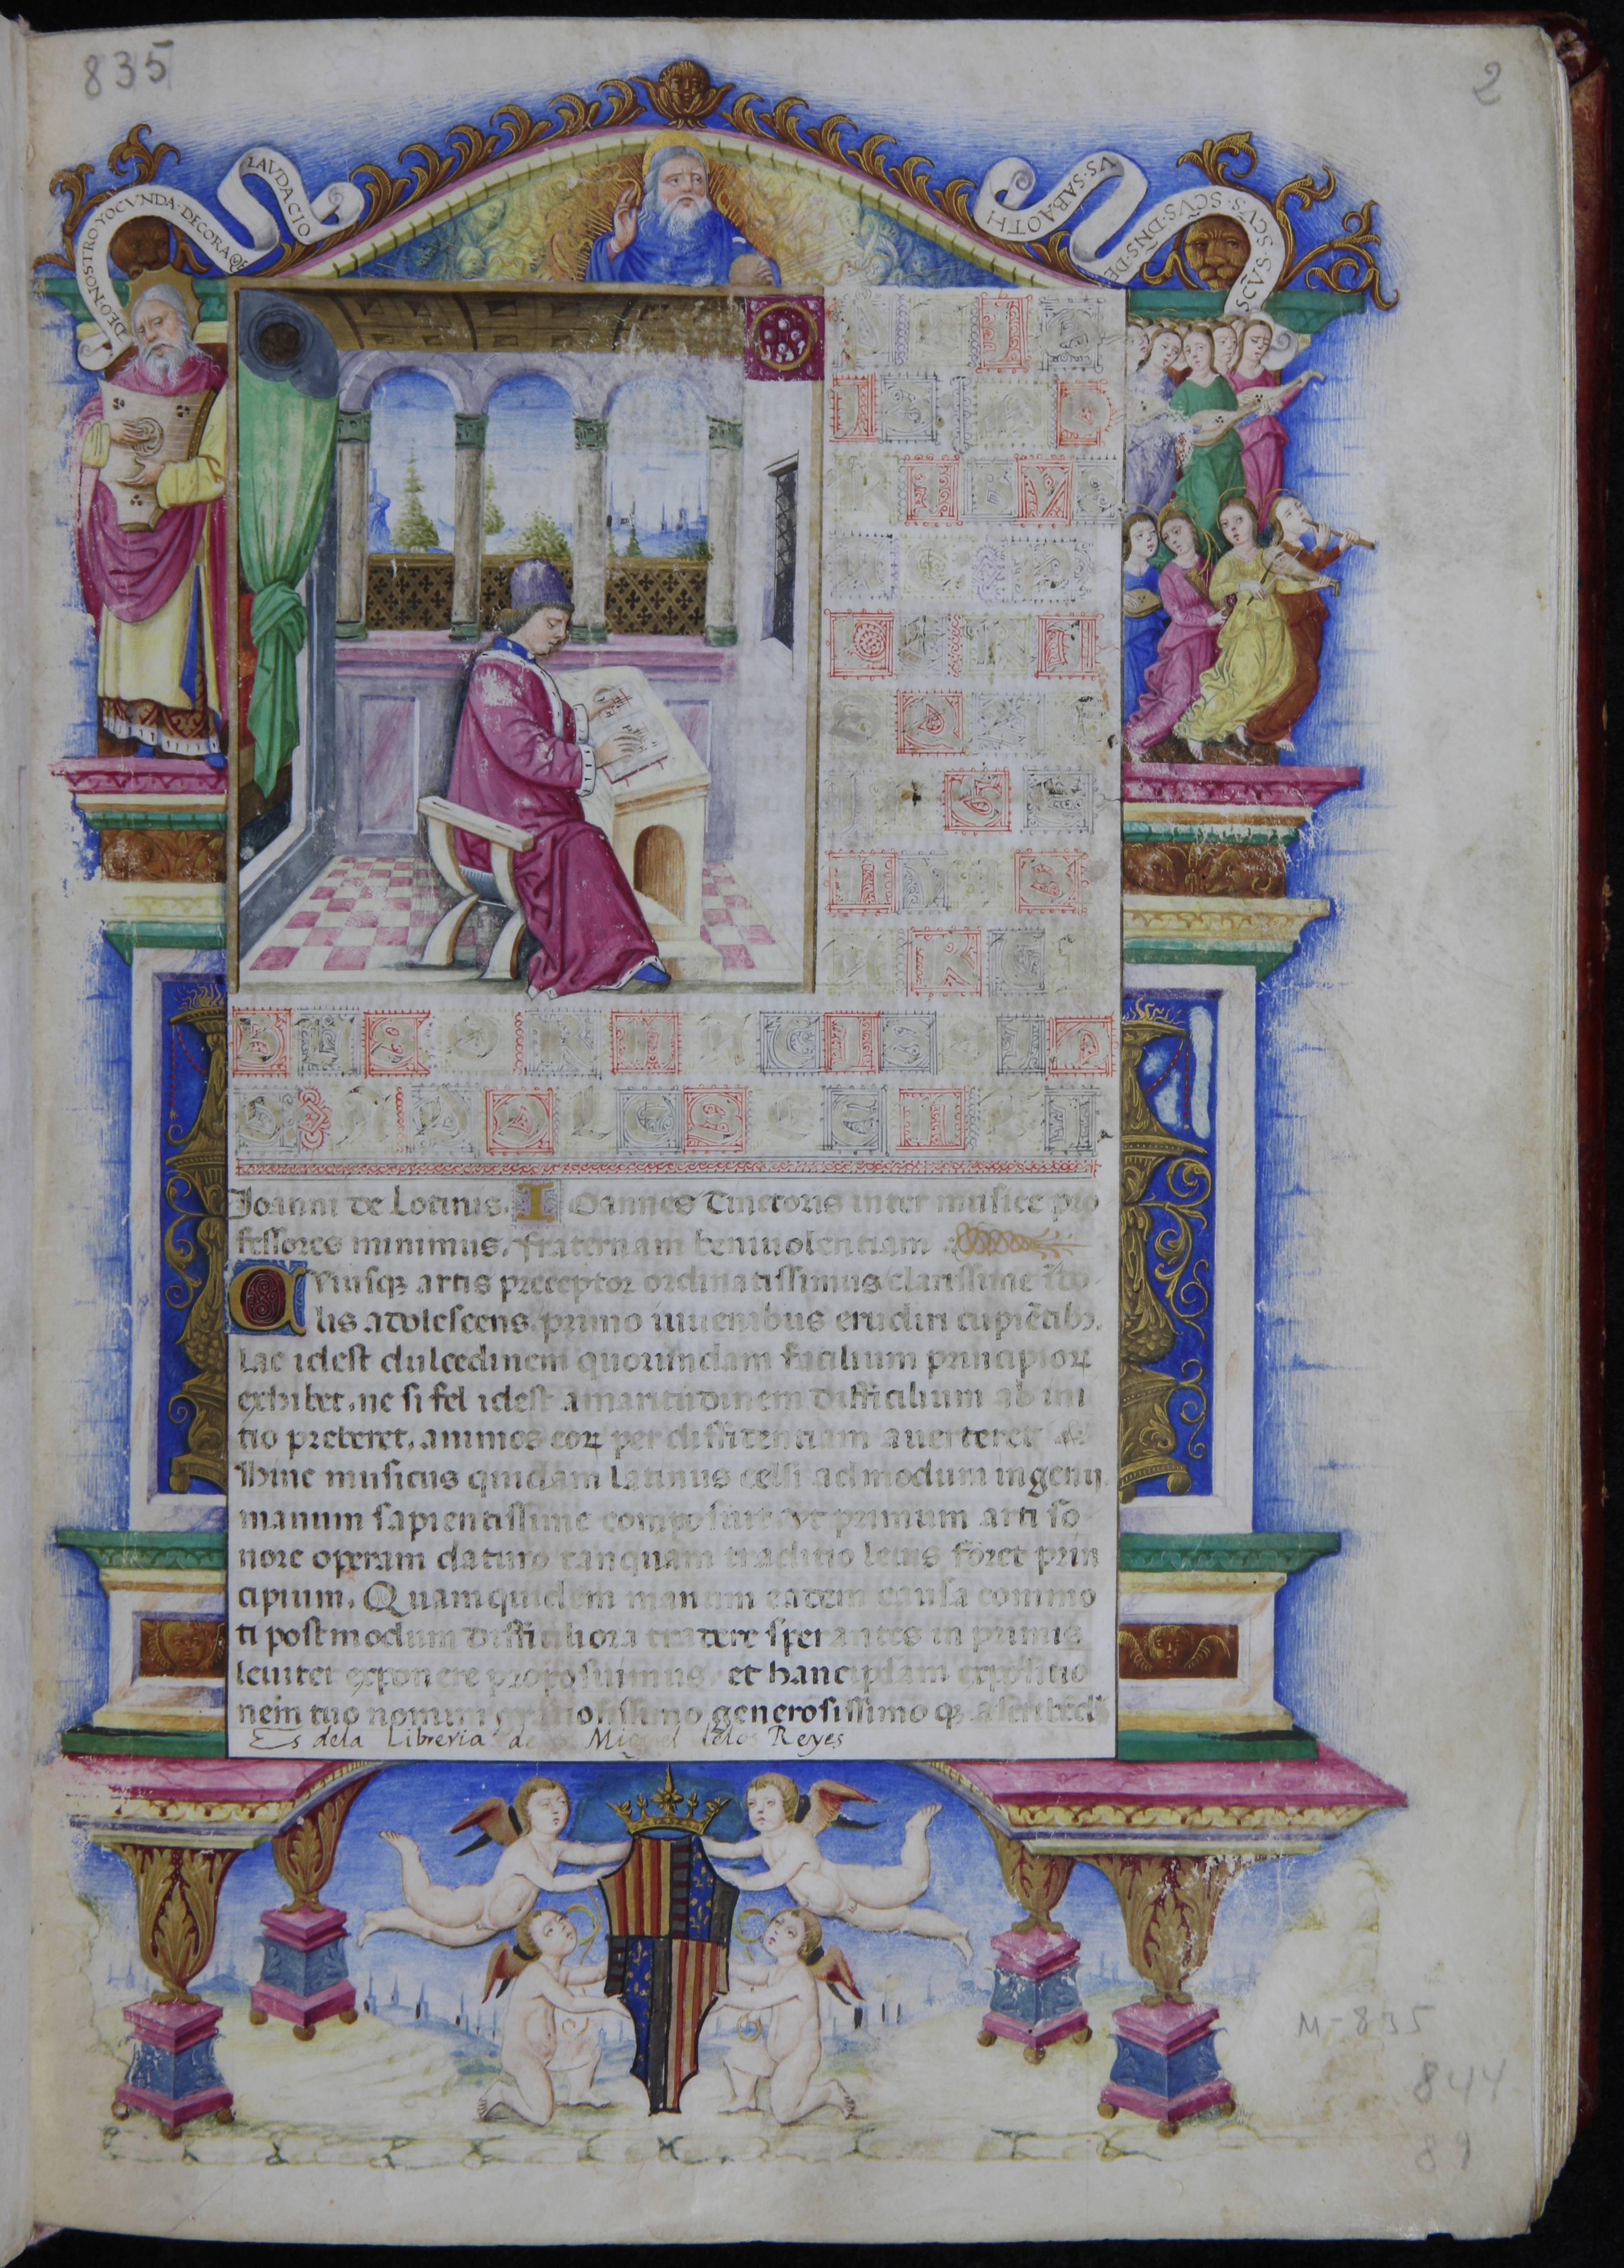 Universitat de València, Biblioteca Històrica, MS 835 [olim 844], fol. 2r: frontispiece. Source: Universitat de València, Biblioteca Històrica. 